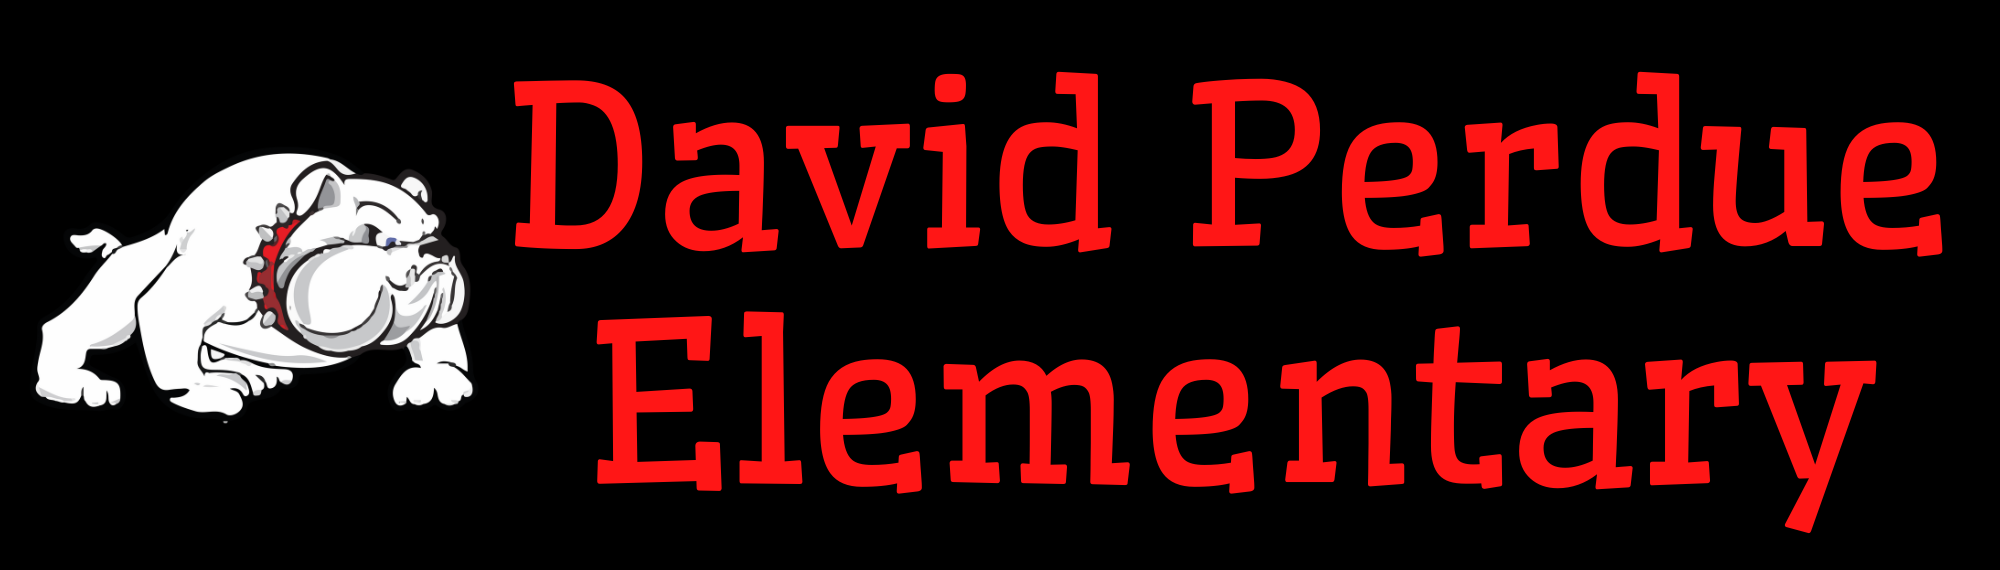 David Perdue Elementary